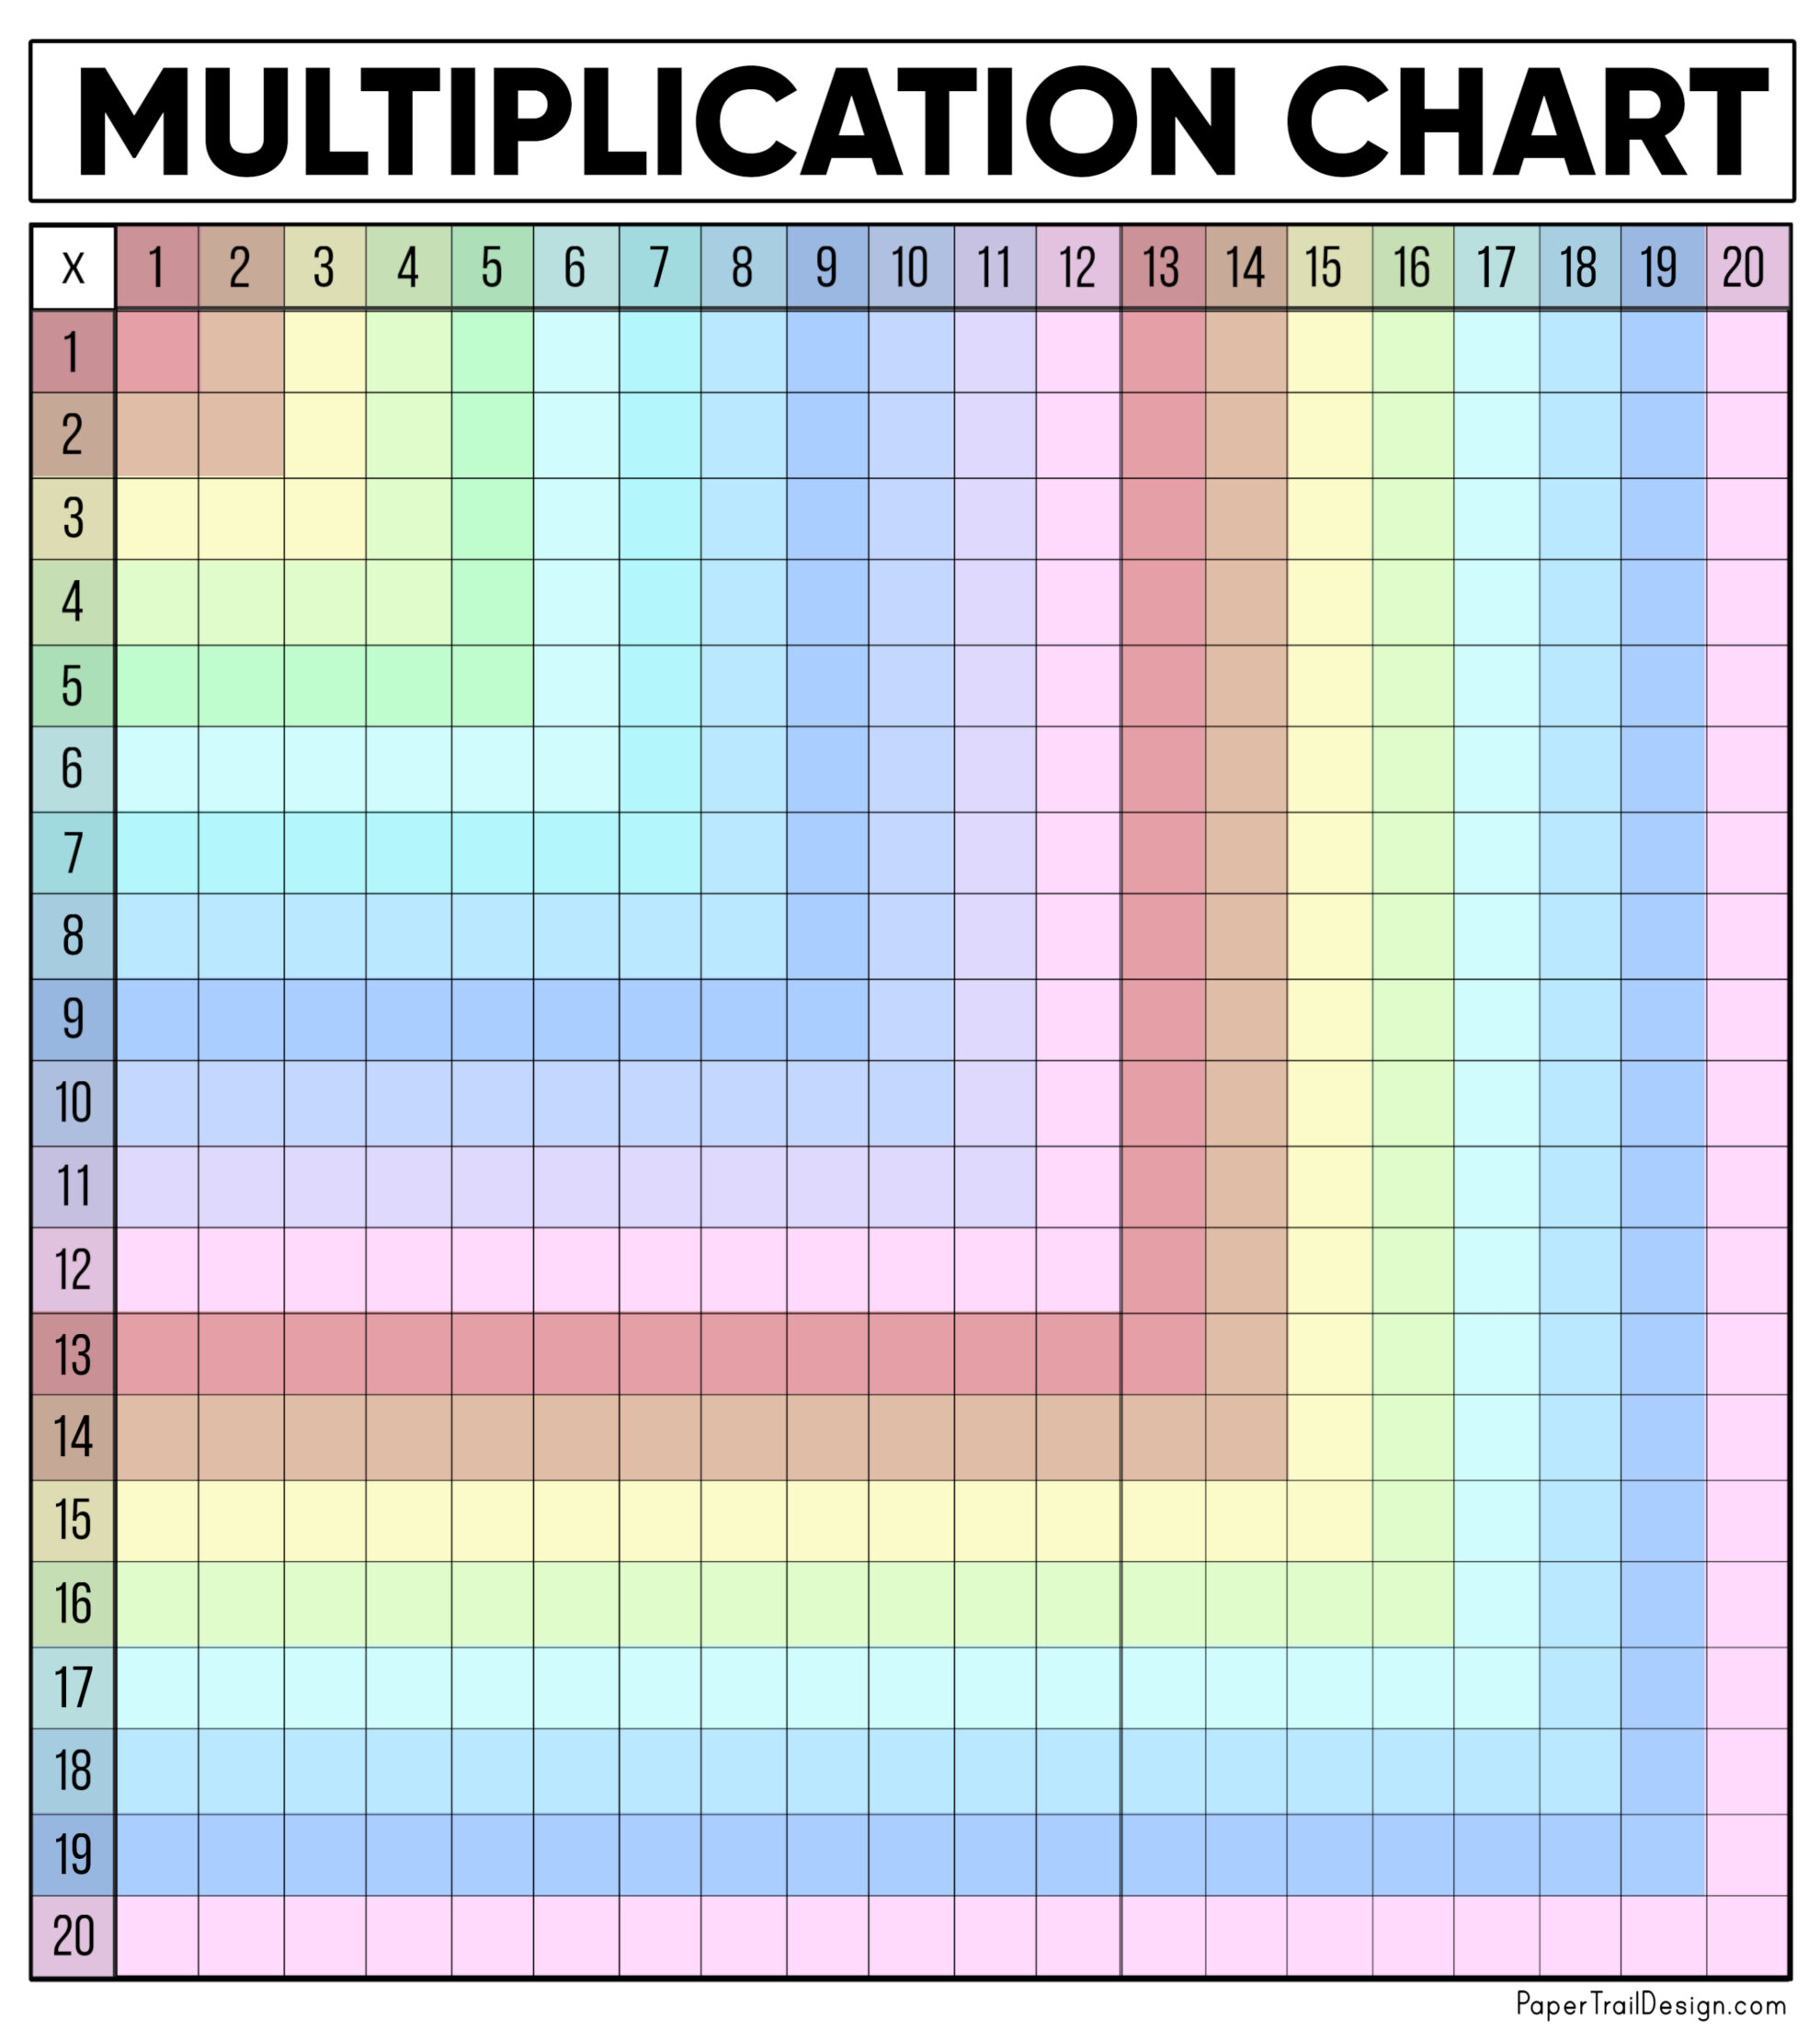 Free printable multiplication chart - plmground